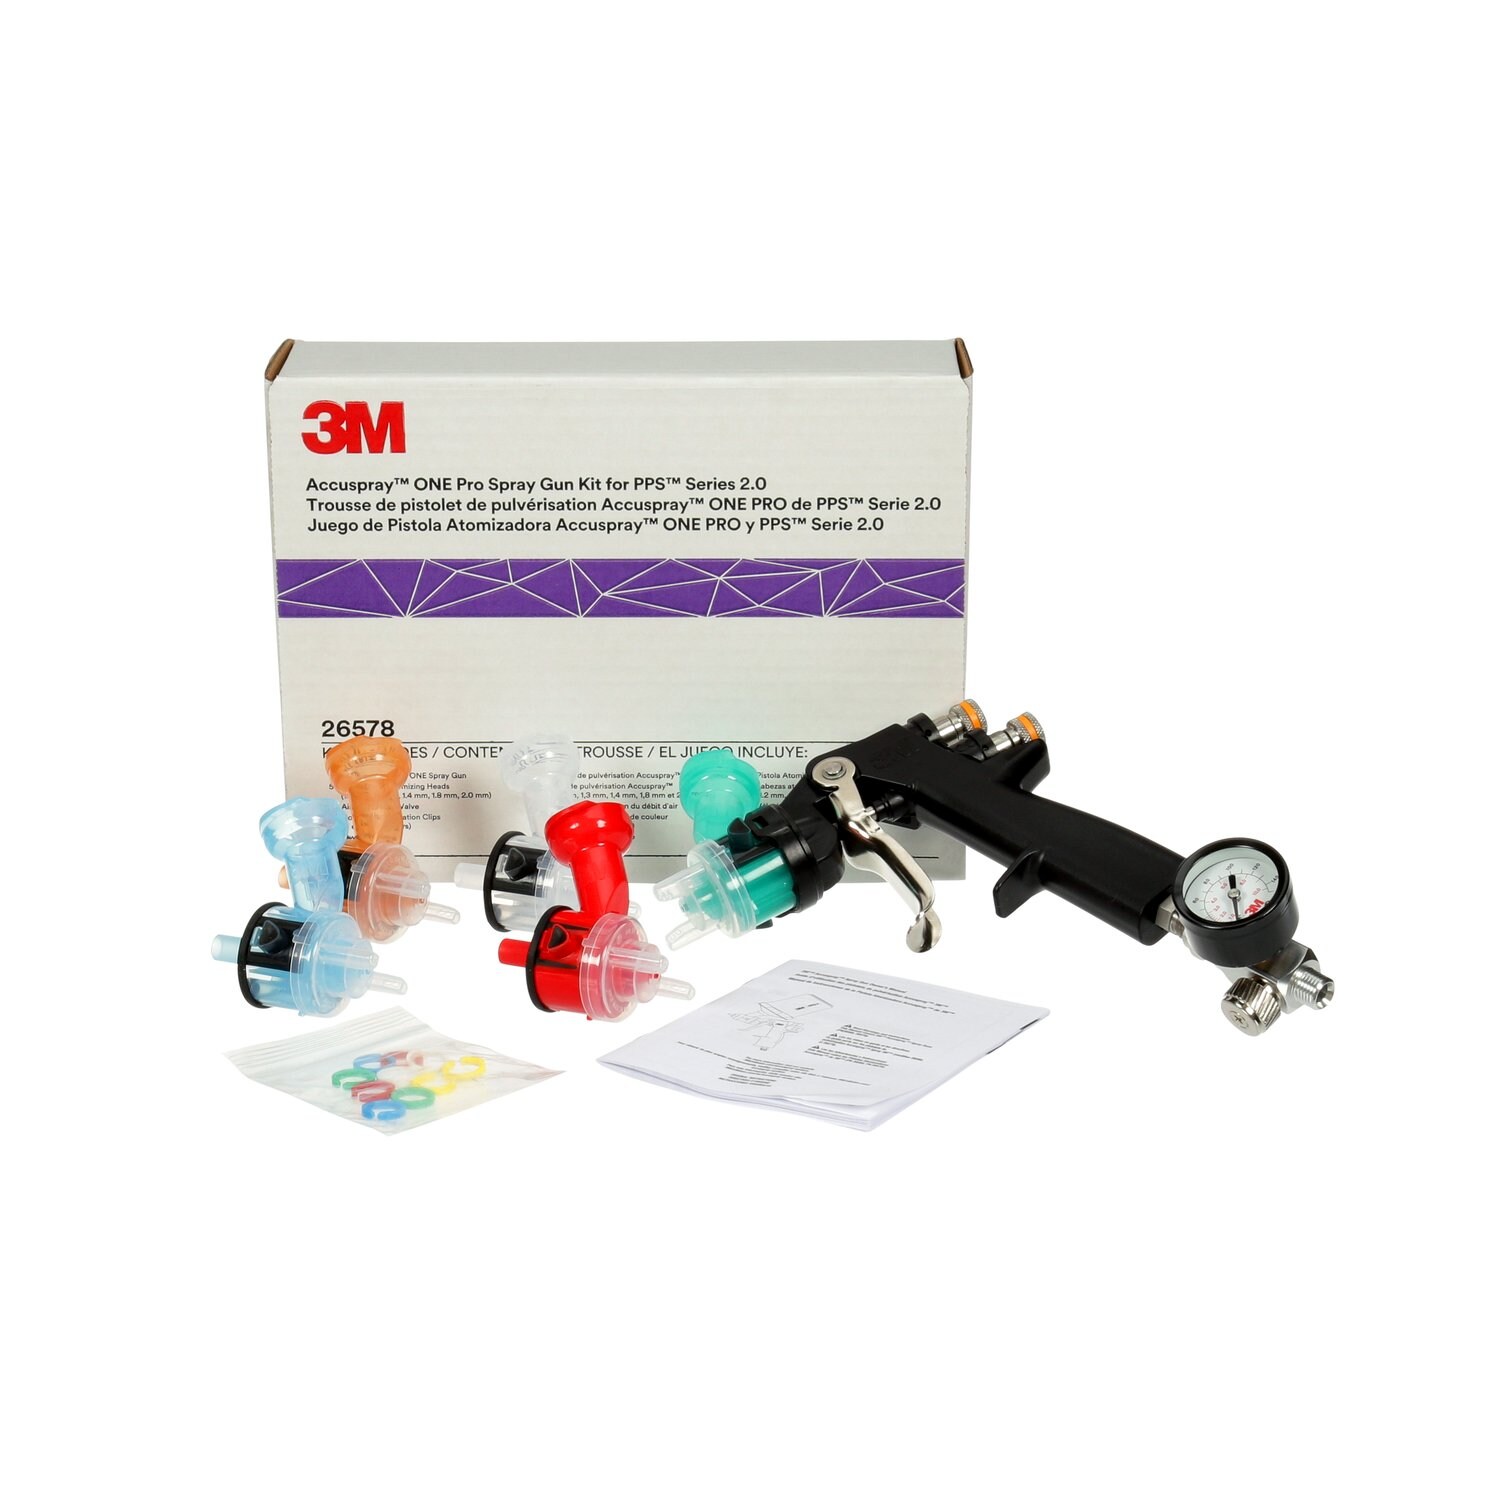 7100158715 - 3M Accuspray ONE Pro Spray Gun Kit for PPS Series 2.0, 26578, 4 kits
per case